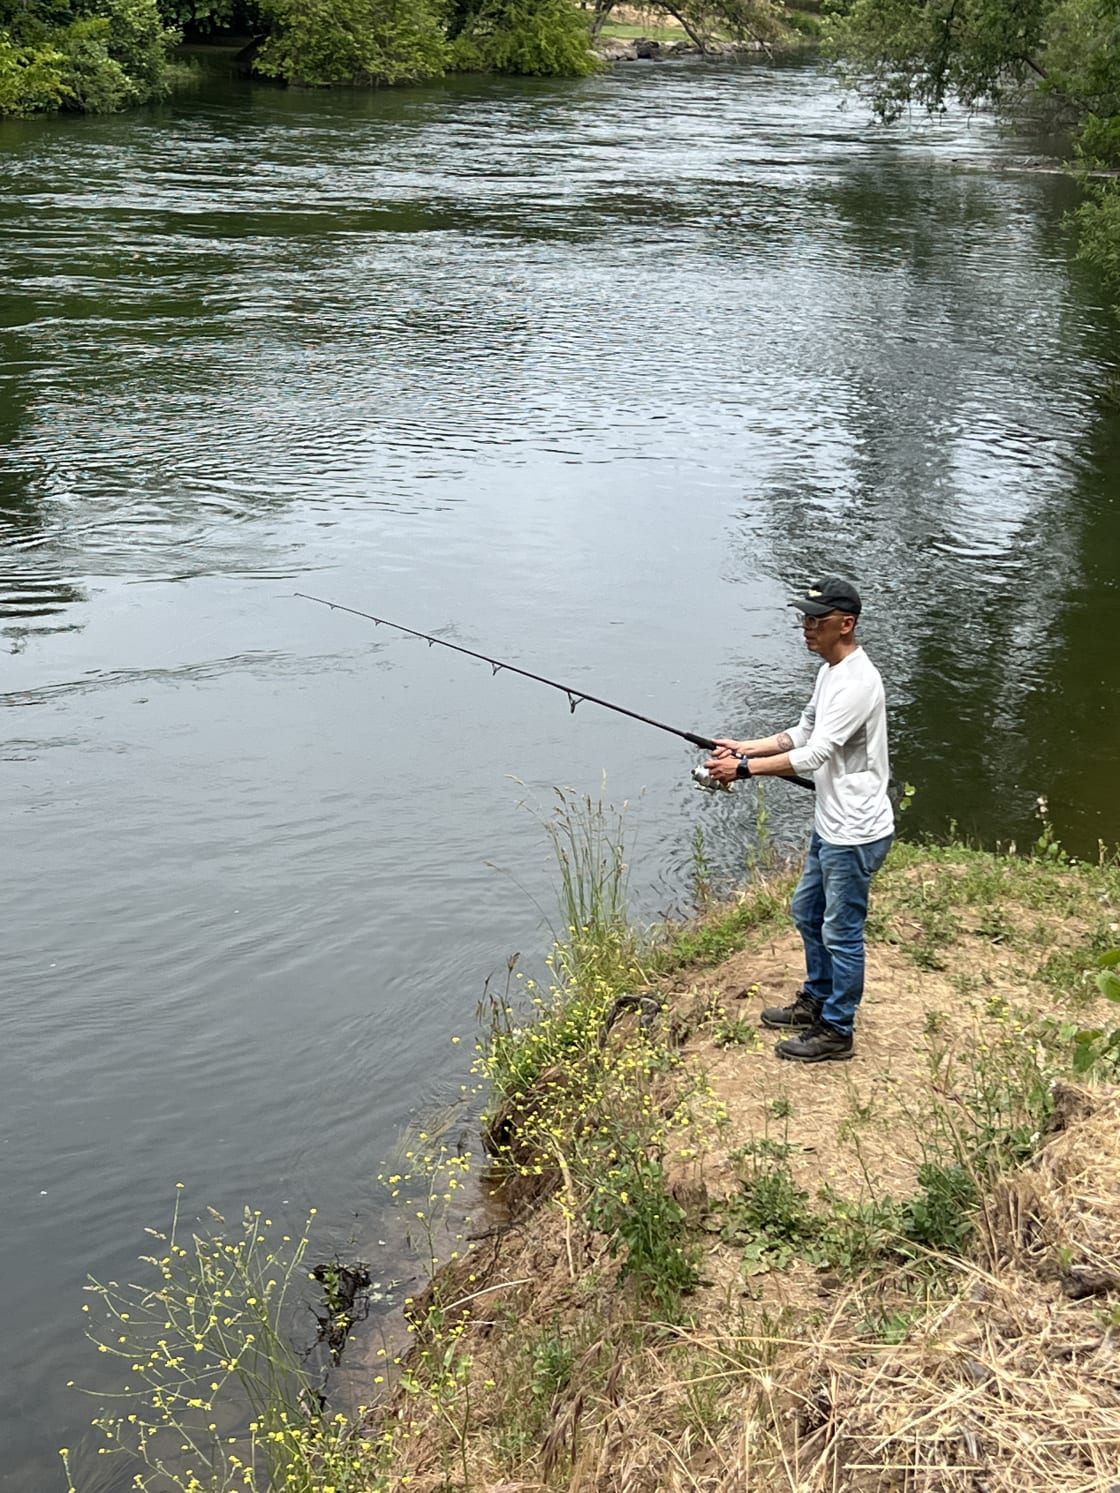 Fishing along the riverbank